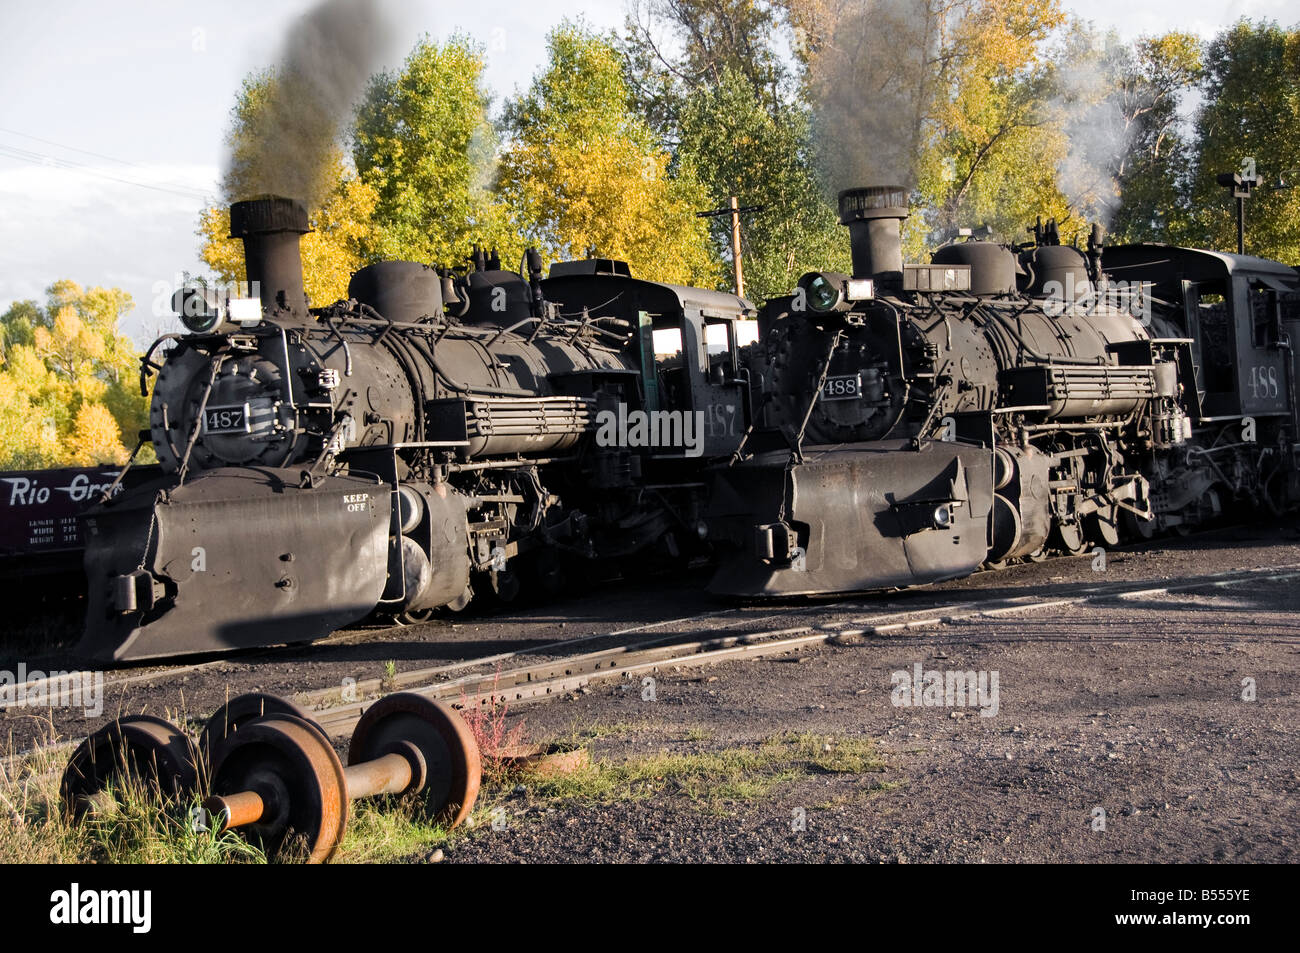 Old fashioned vintage locomotive train engine Stock Photo